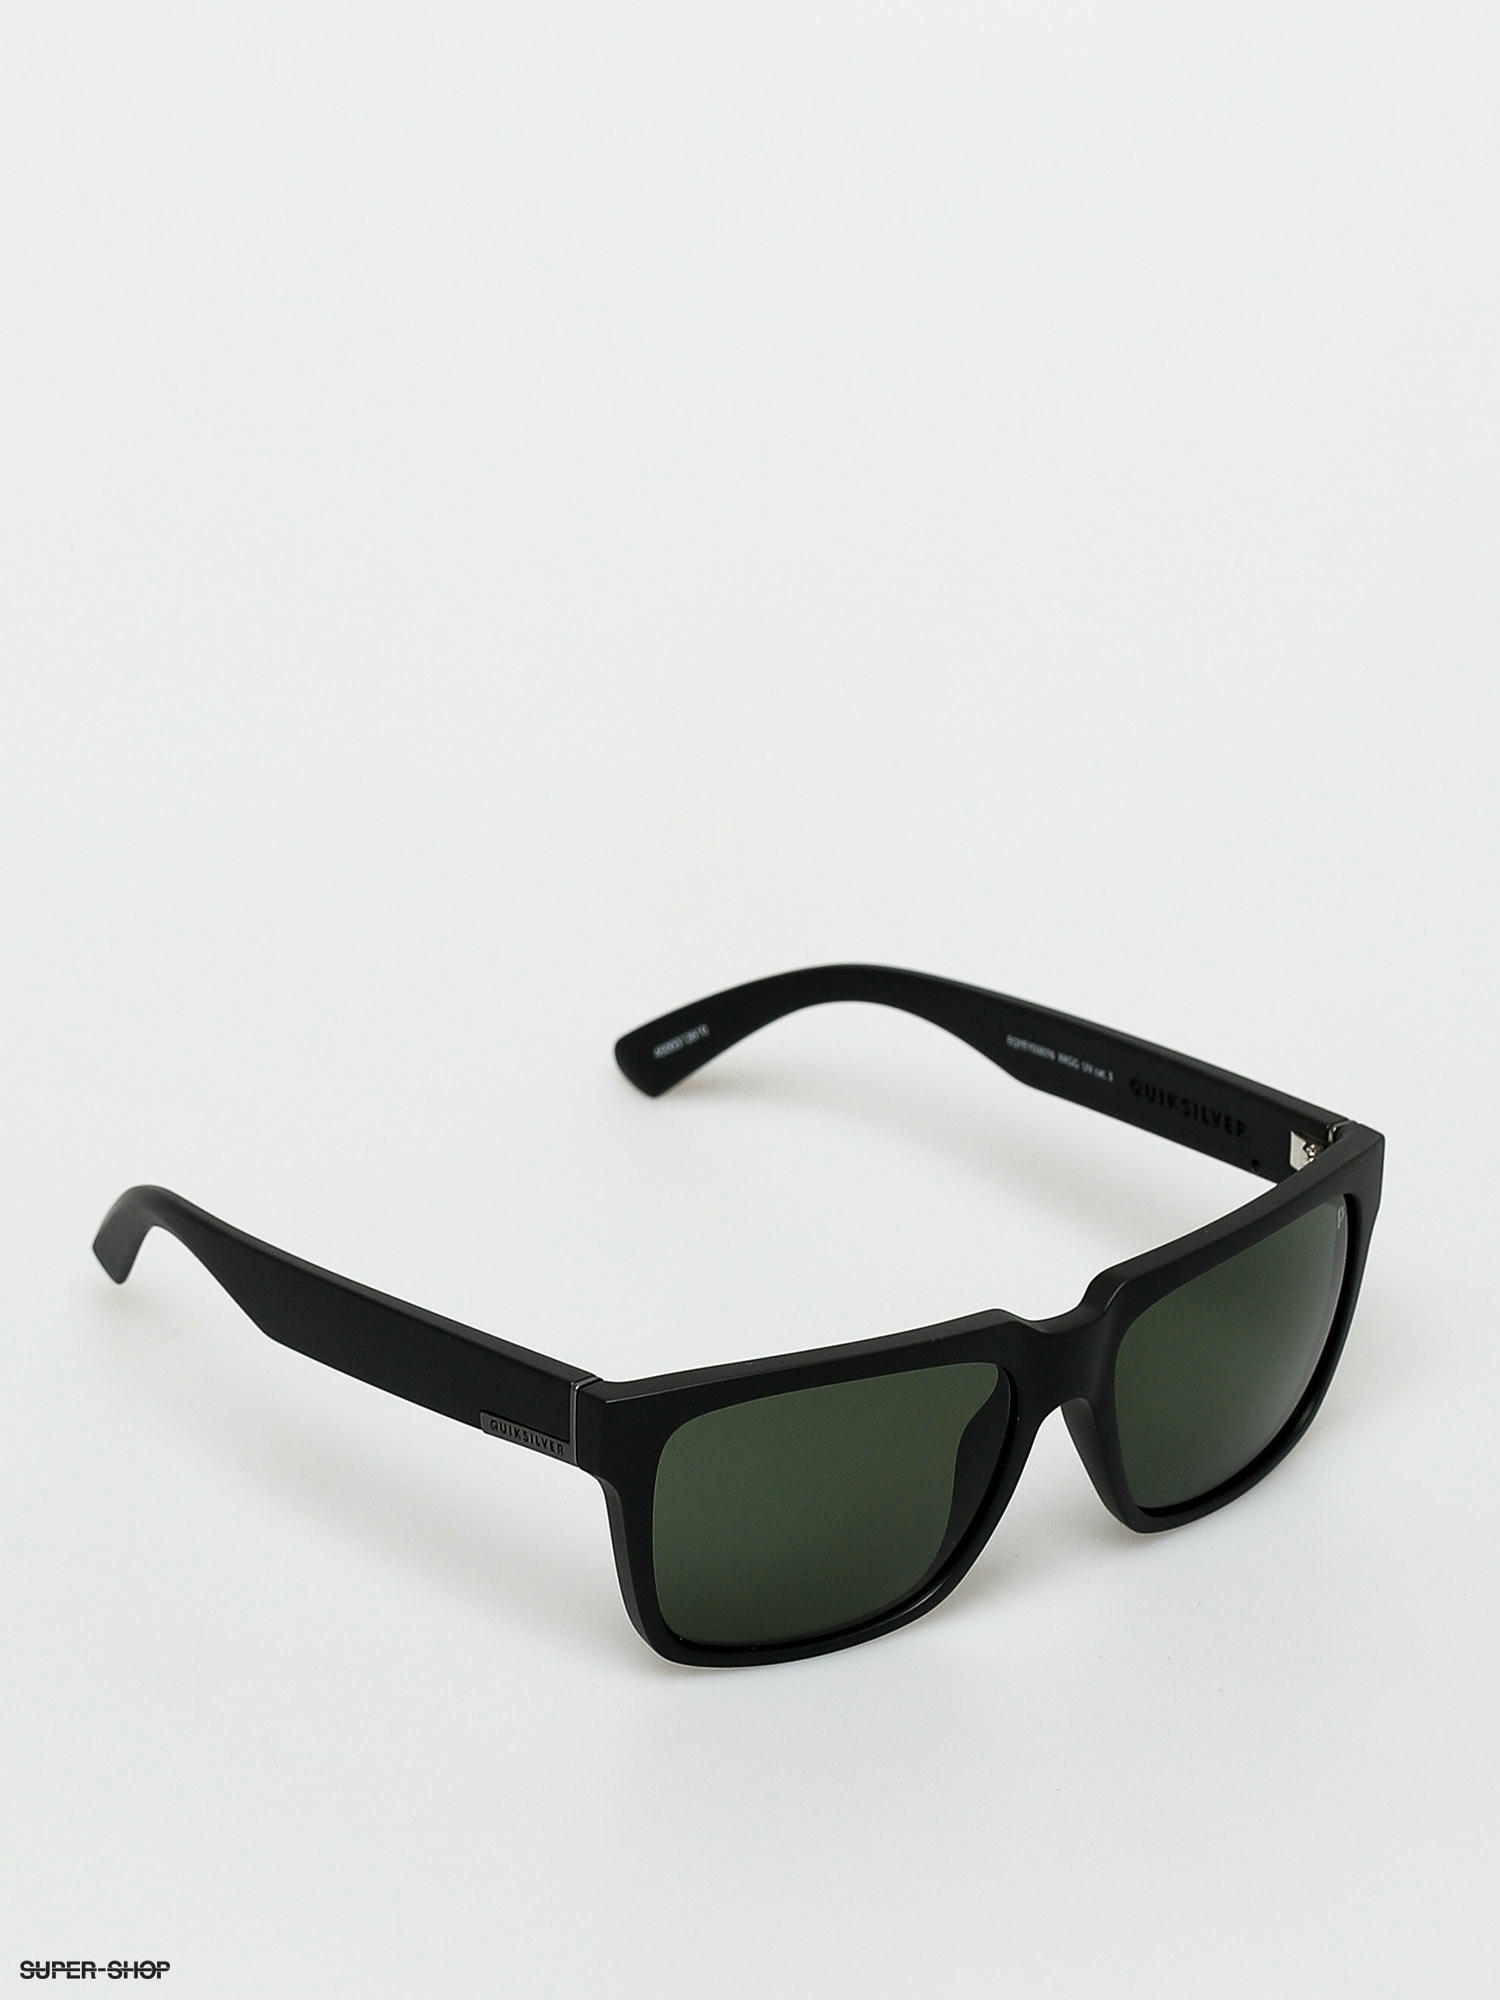 Quiksilver Bruiser Polarized black/green Sunglasses p) (matte